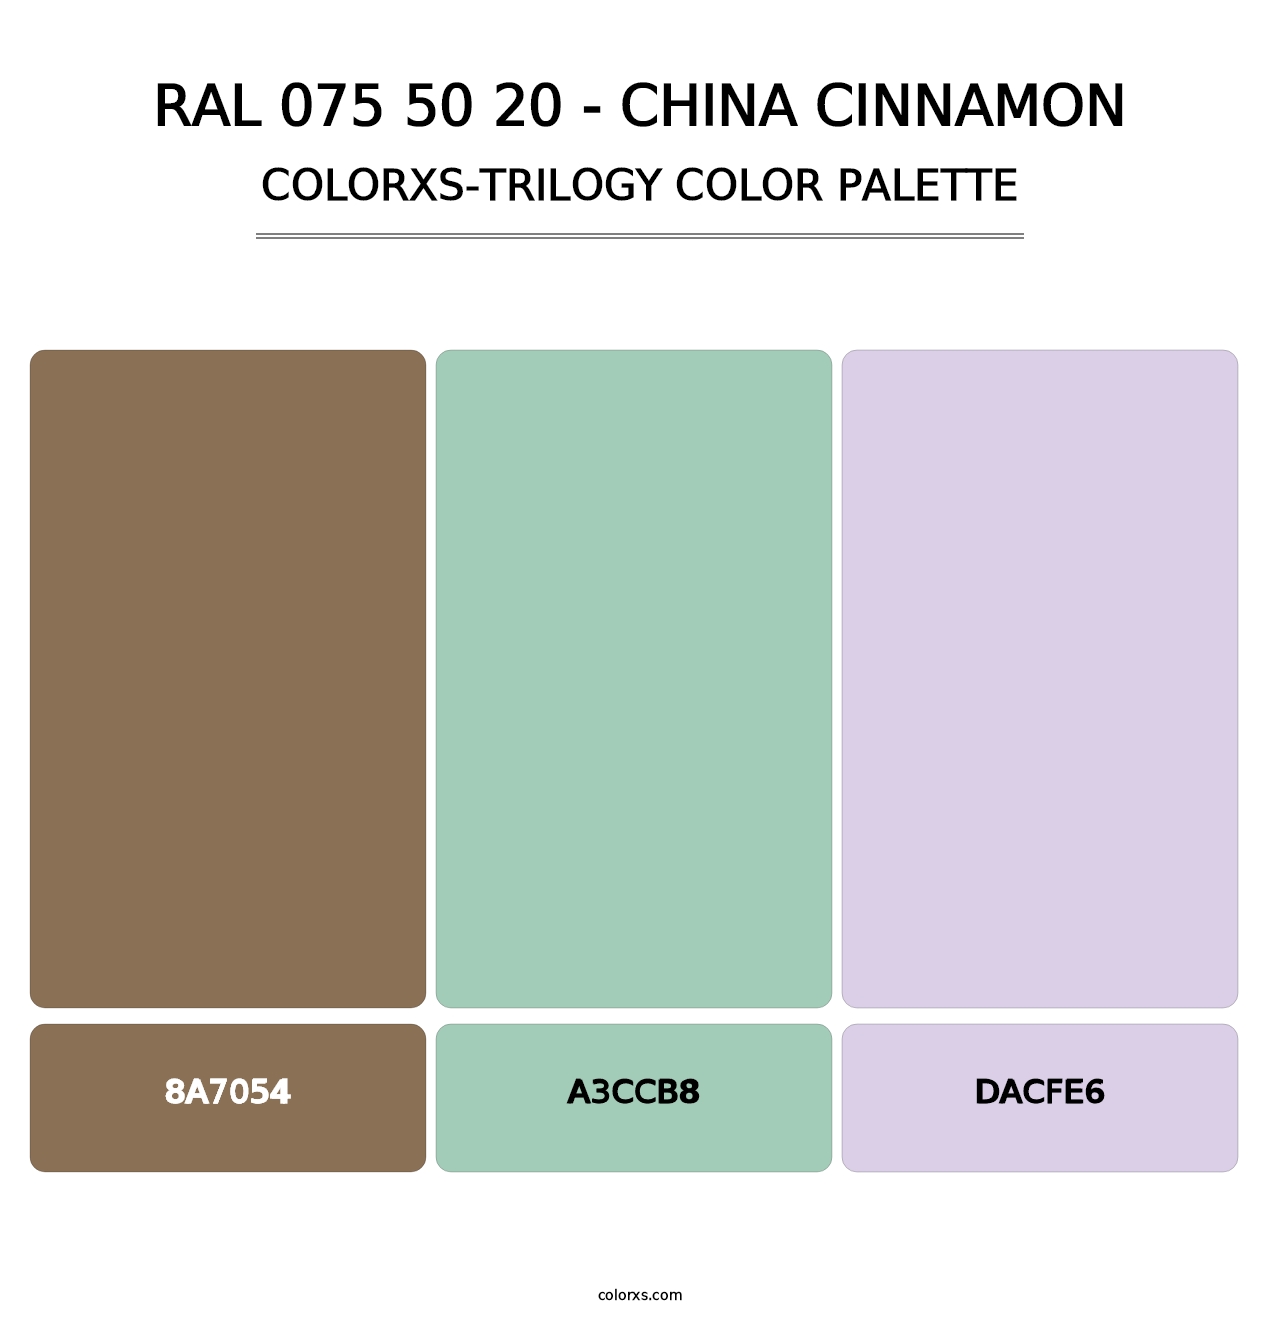 RAL 075 50 20 - China Cinnamon - Colorxs Trilogy Palette